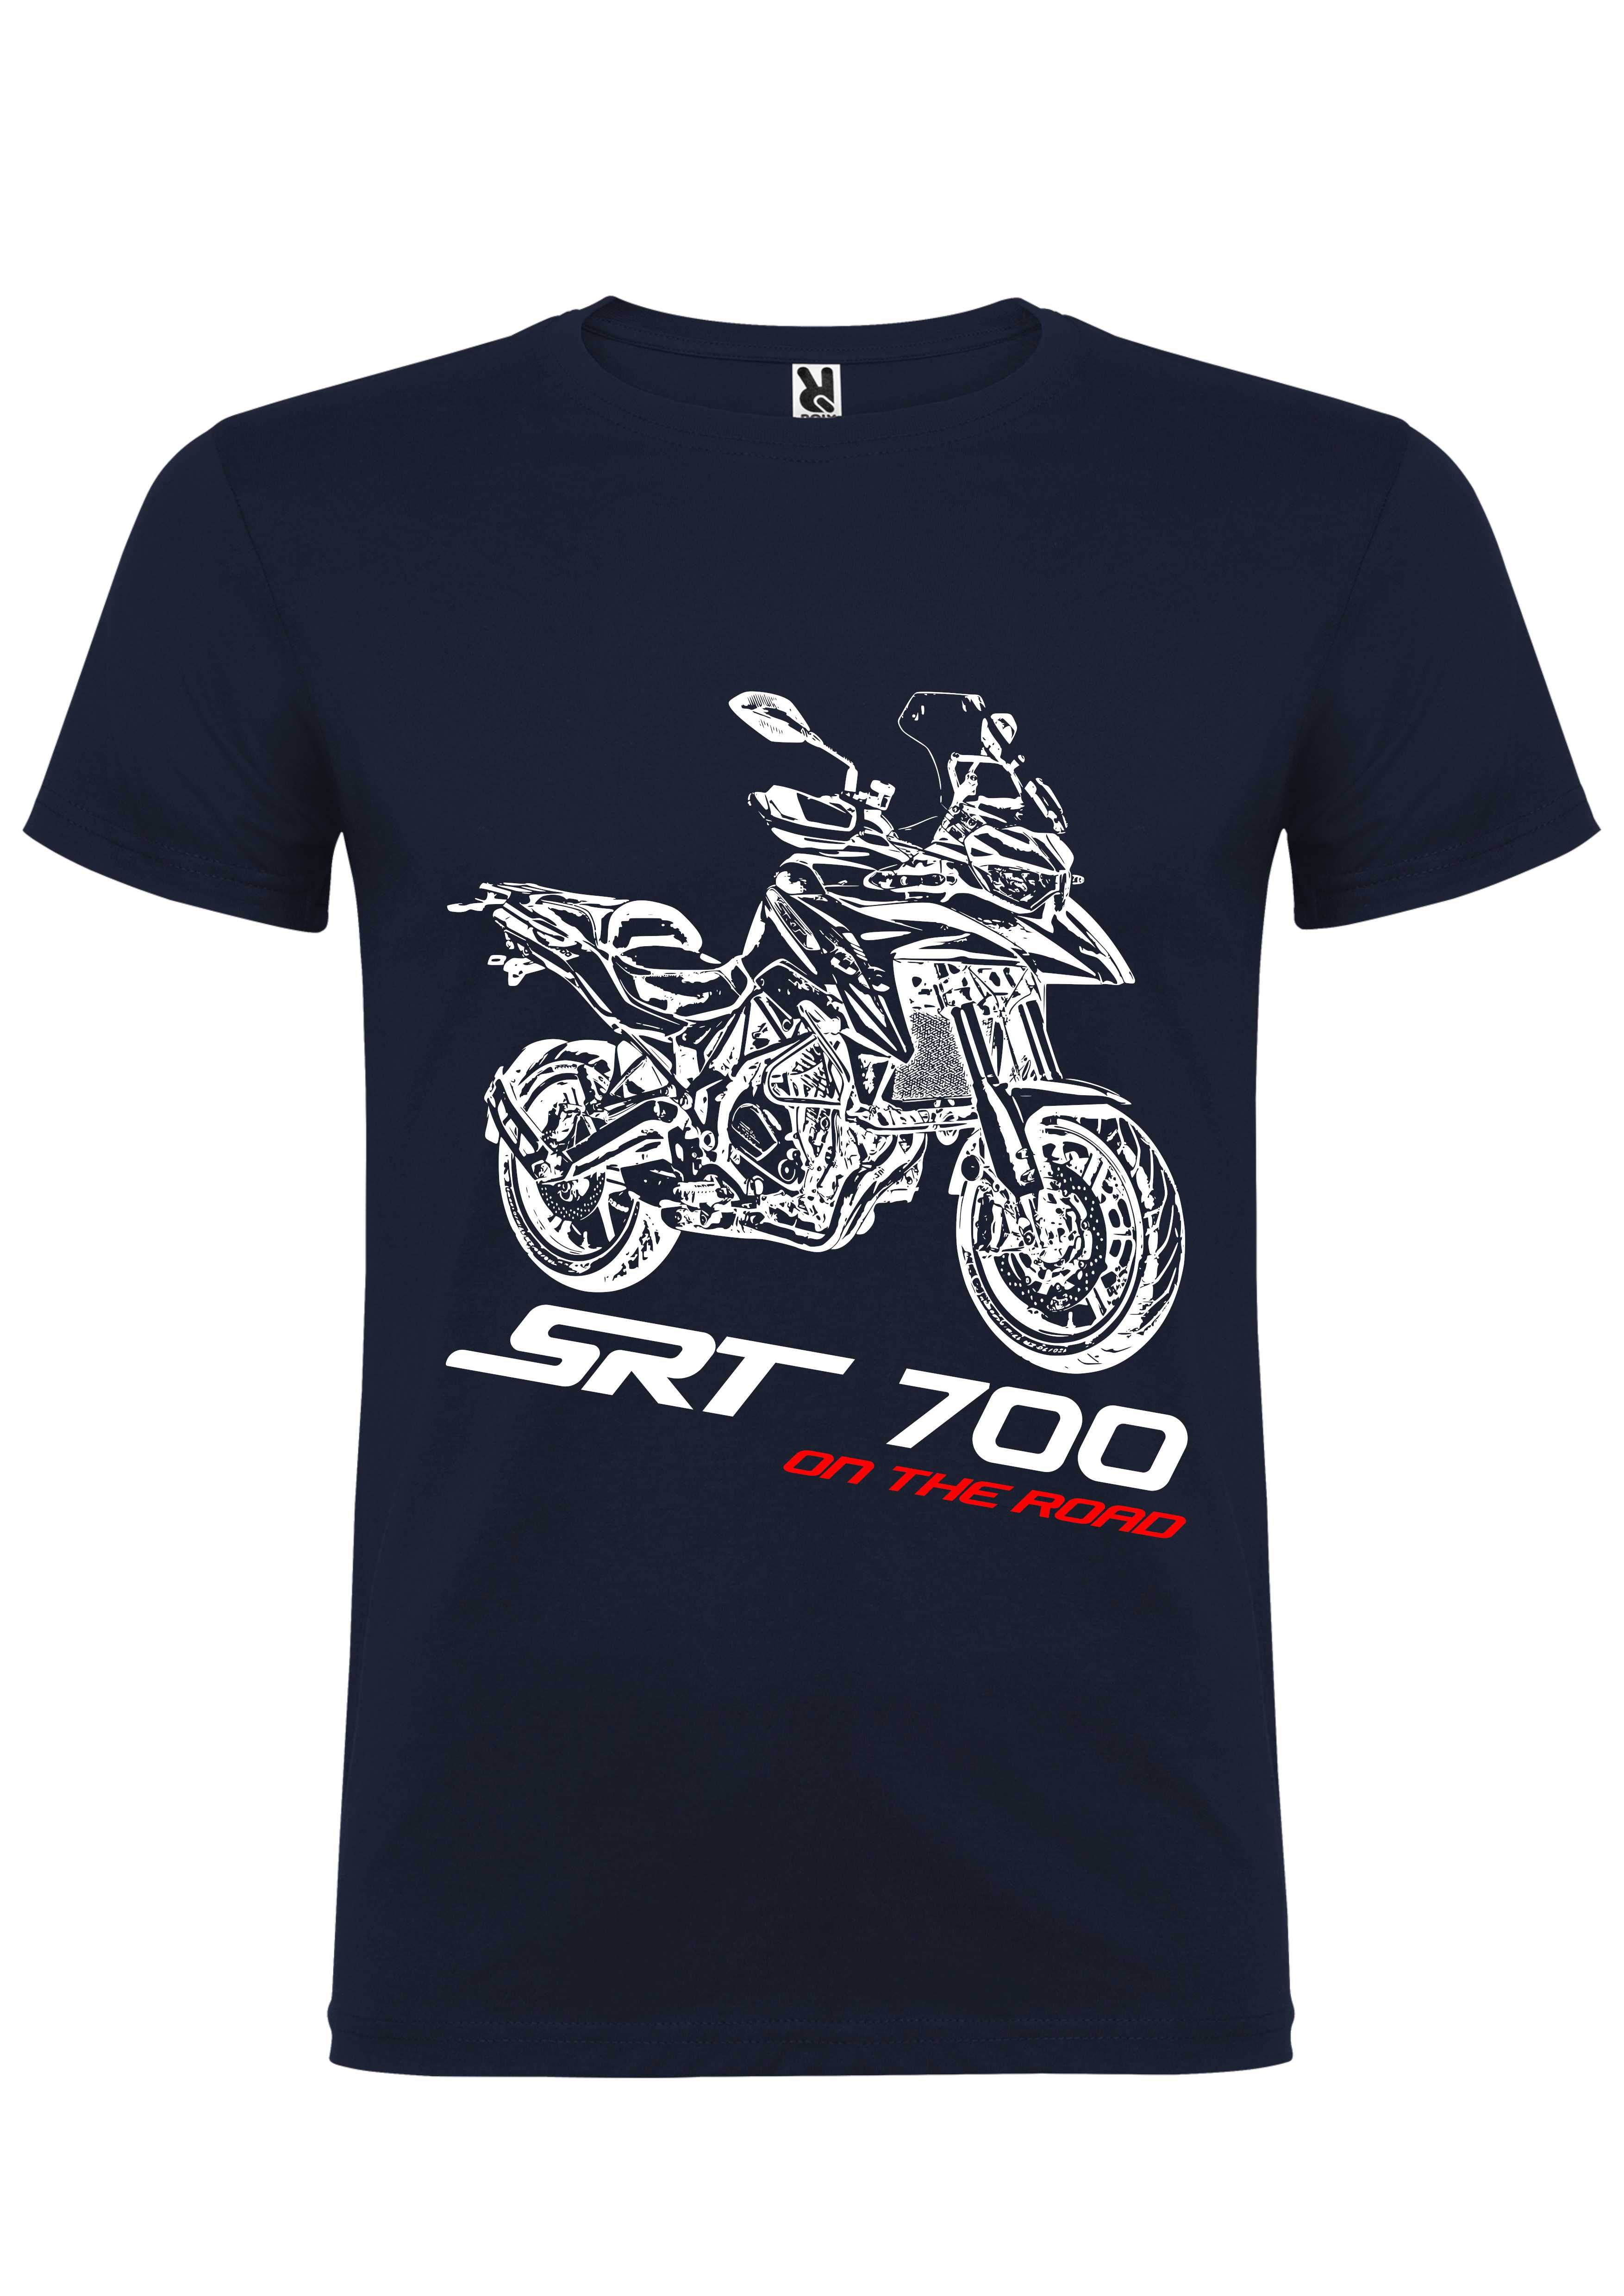 T-shirt SRT 700 ON THE ROAD sinueta